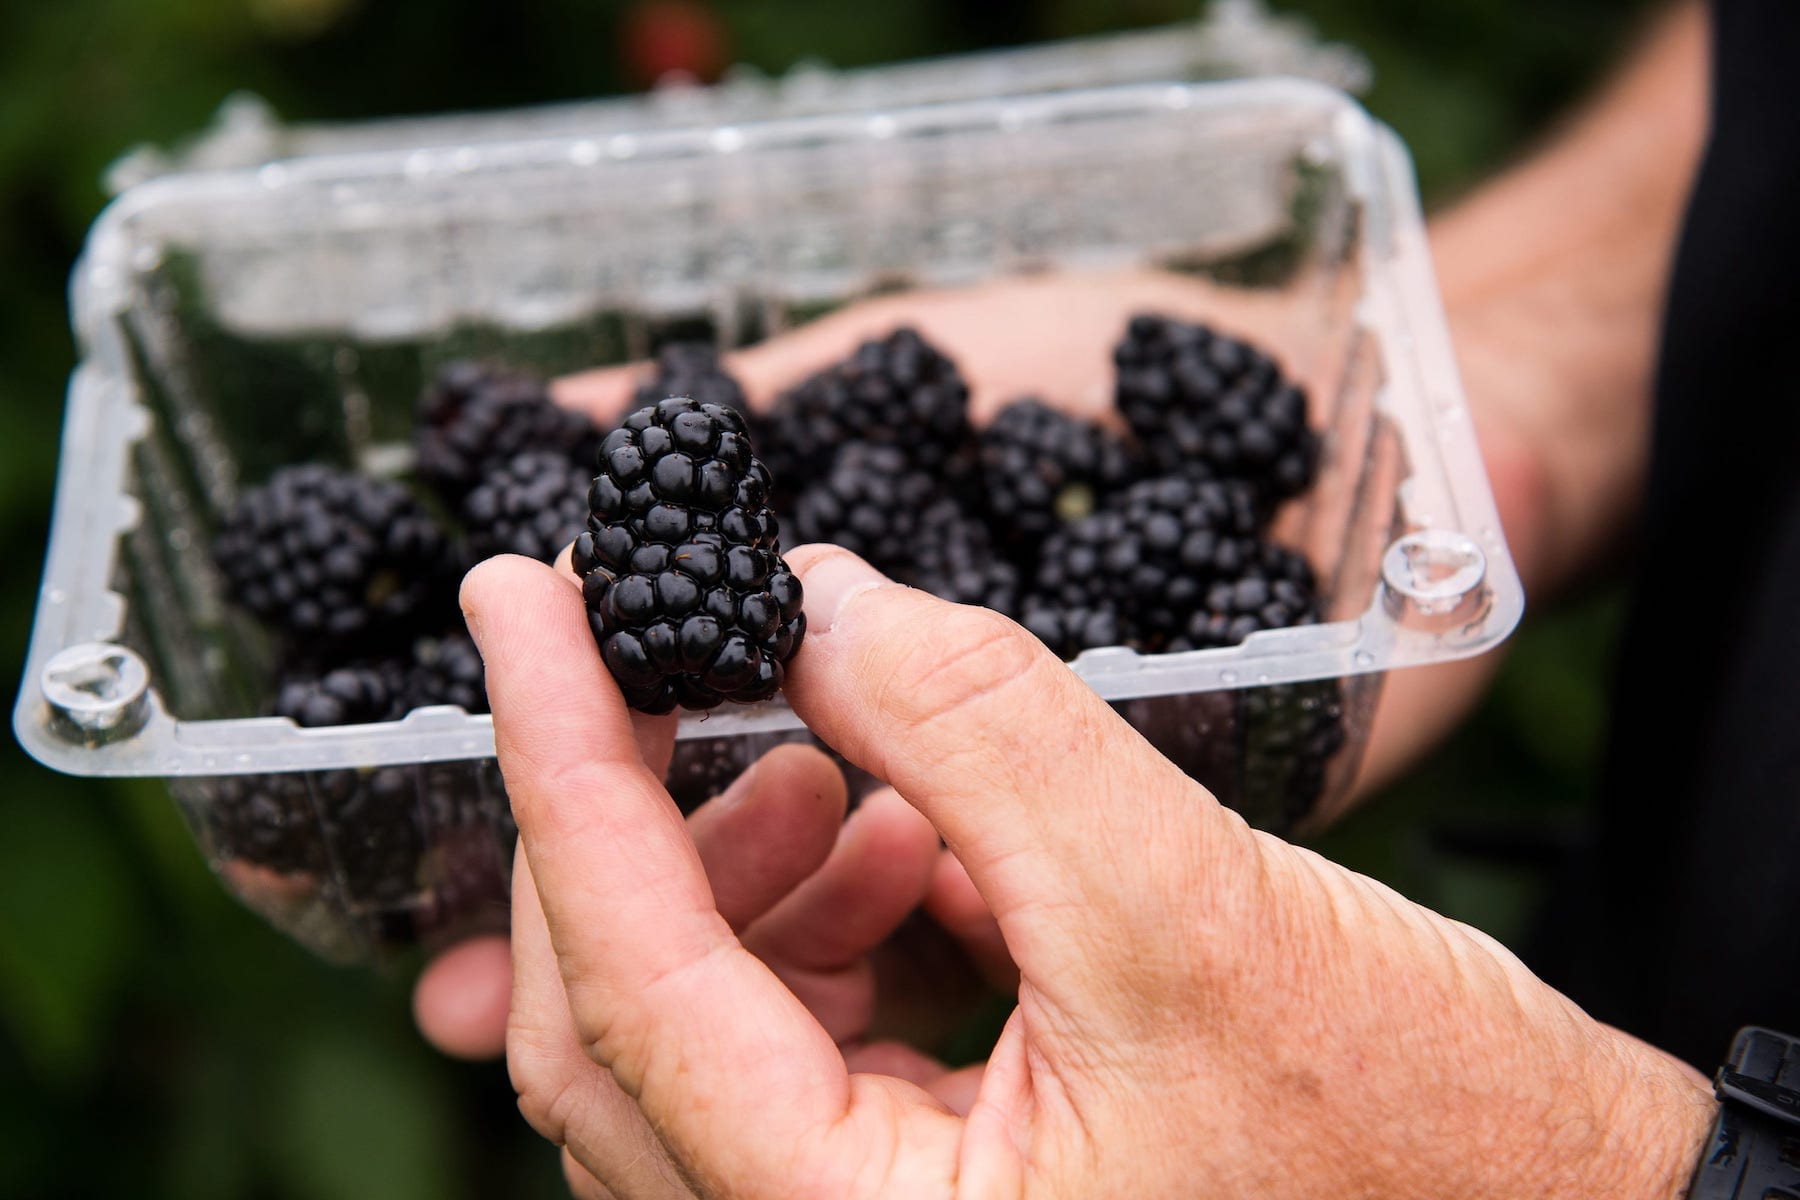 Primocane blackberries open new markets for fruit growers